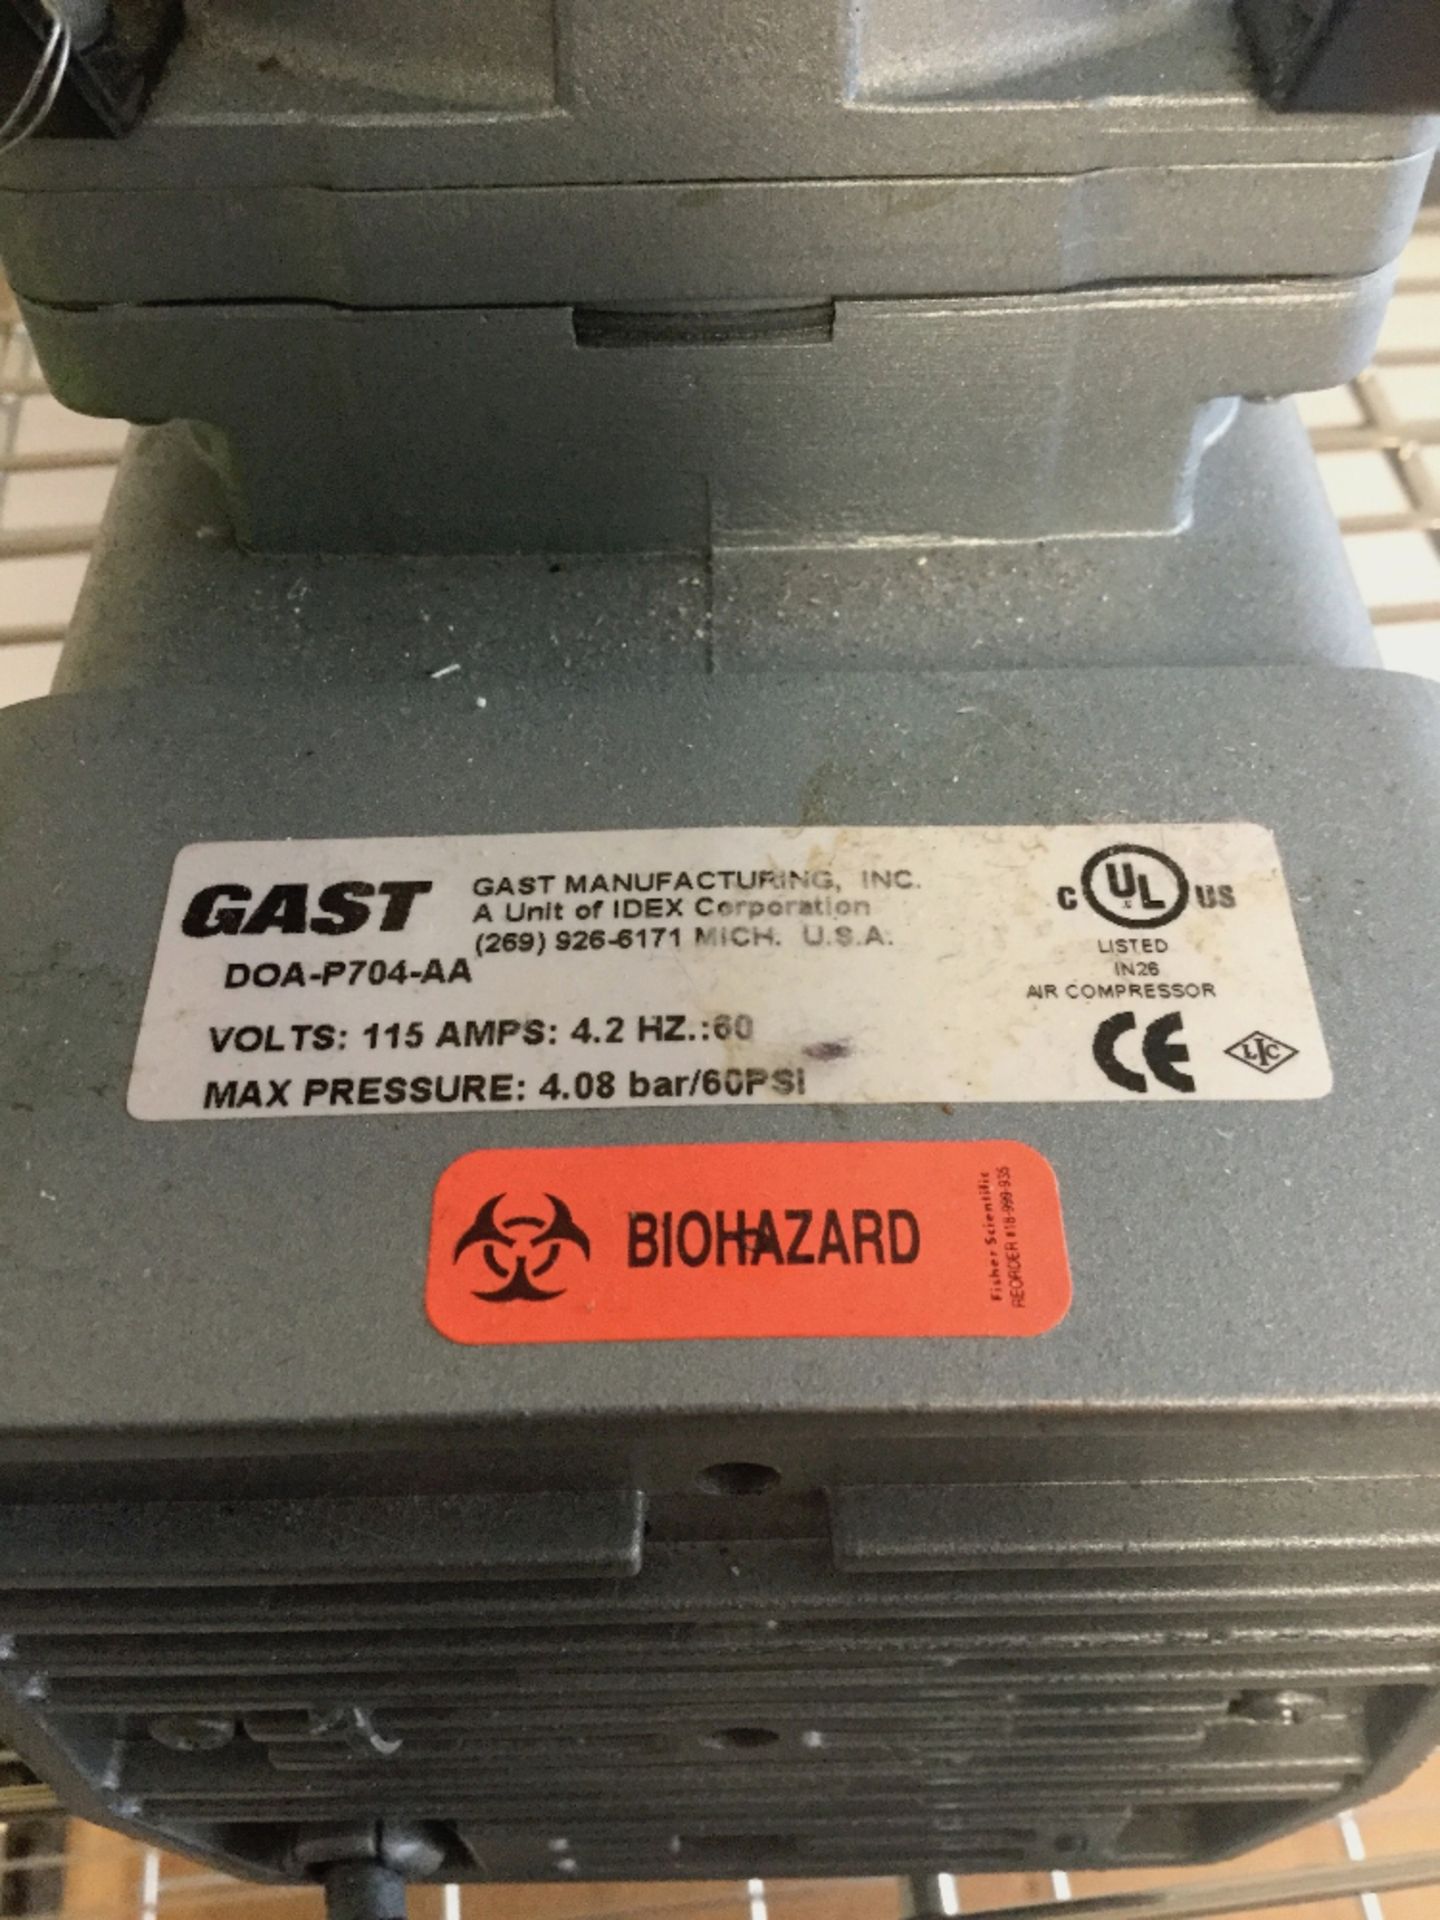 Gast DOA-P704-AA Vacuum Pump - Image 2 of 2